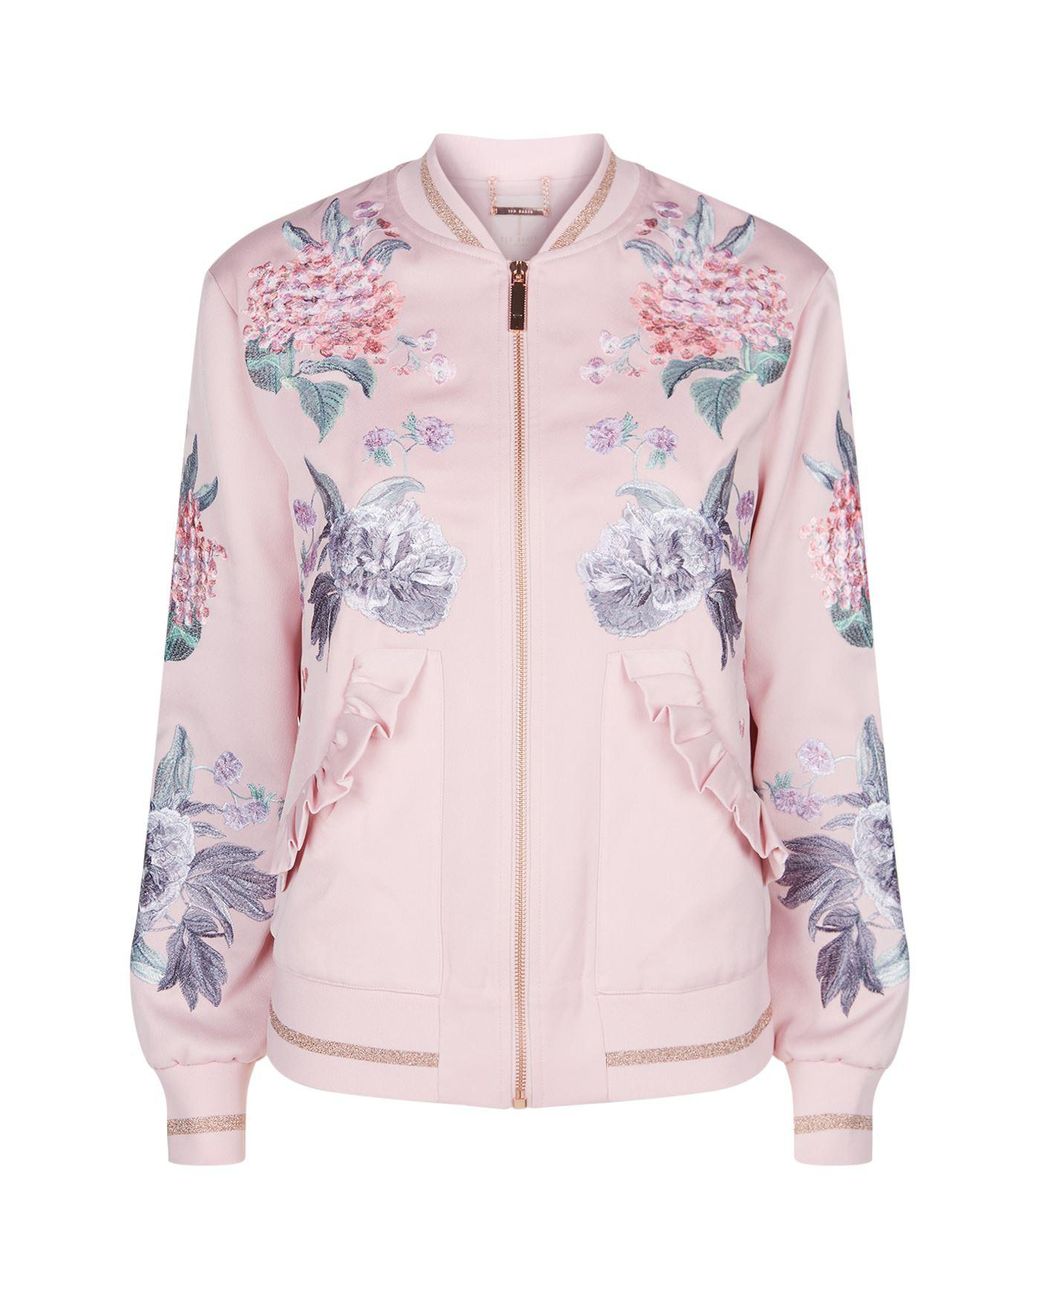 Ted Baker Allisza Floral Bomber Jacket in Pink | Lyst UK